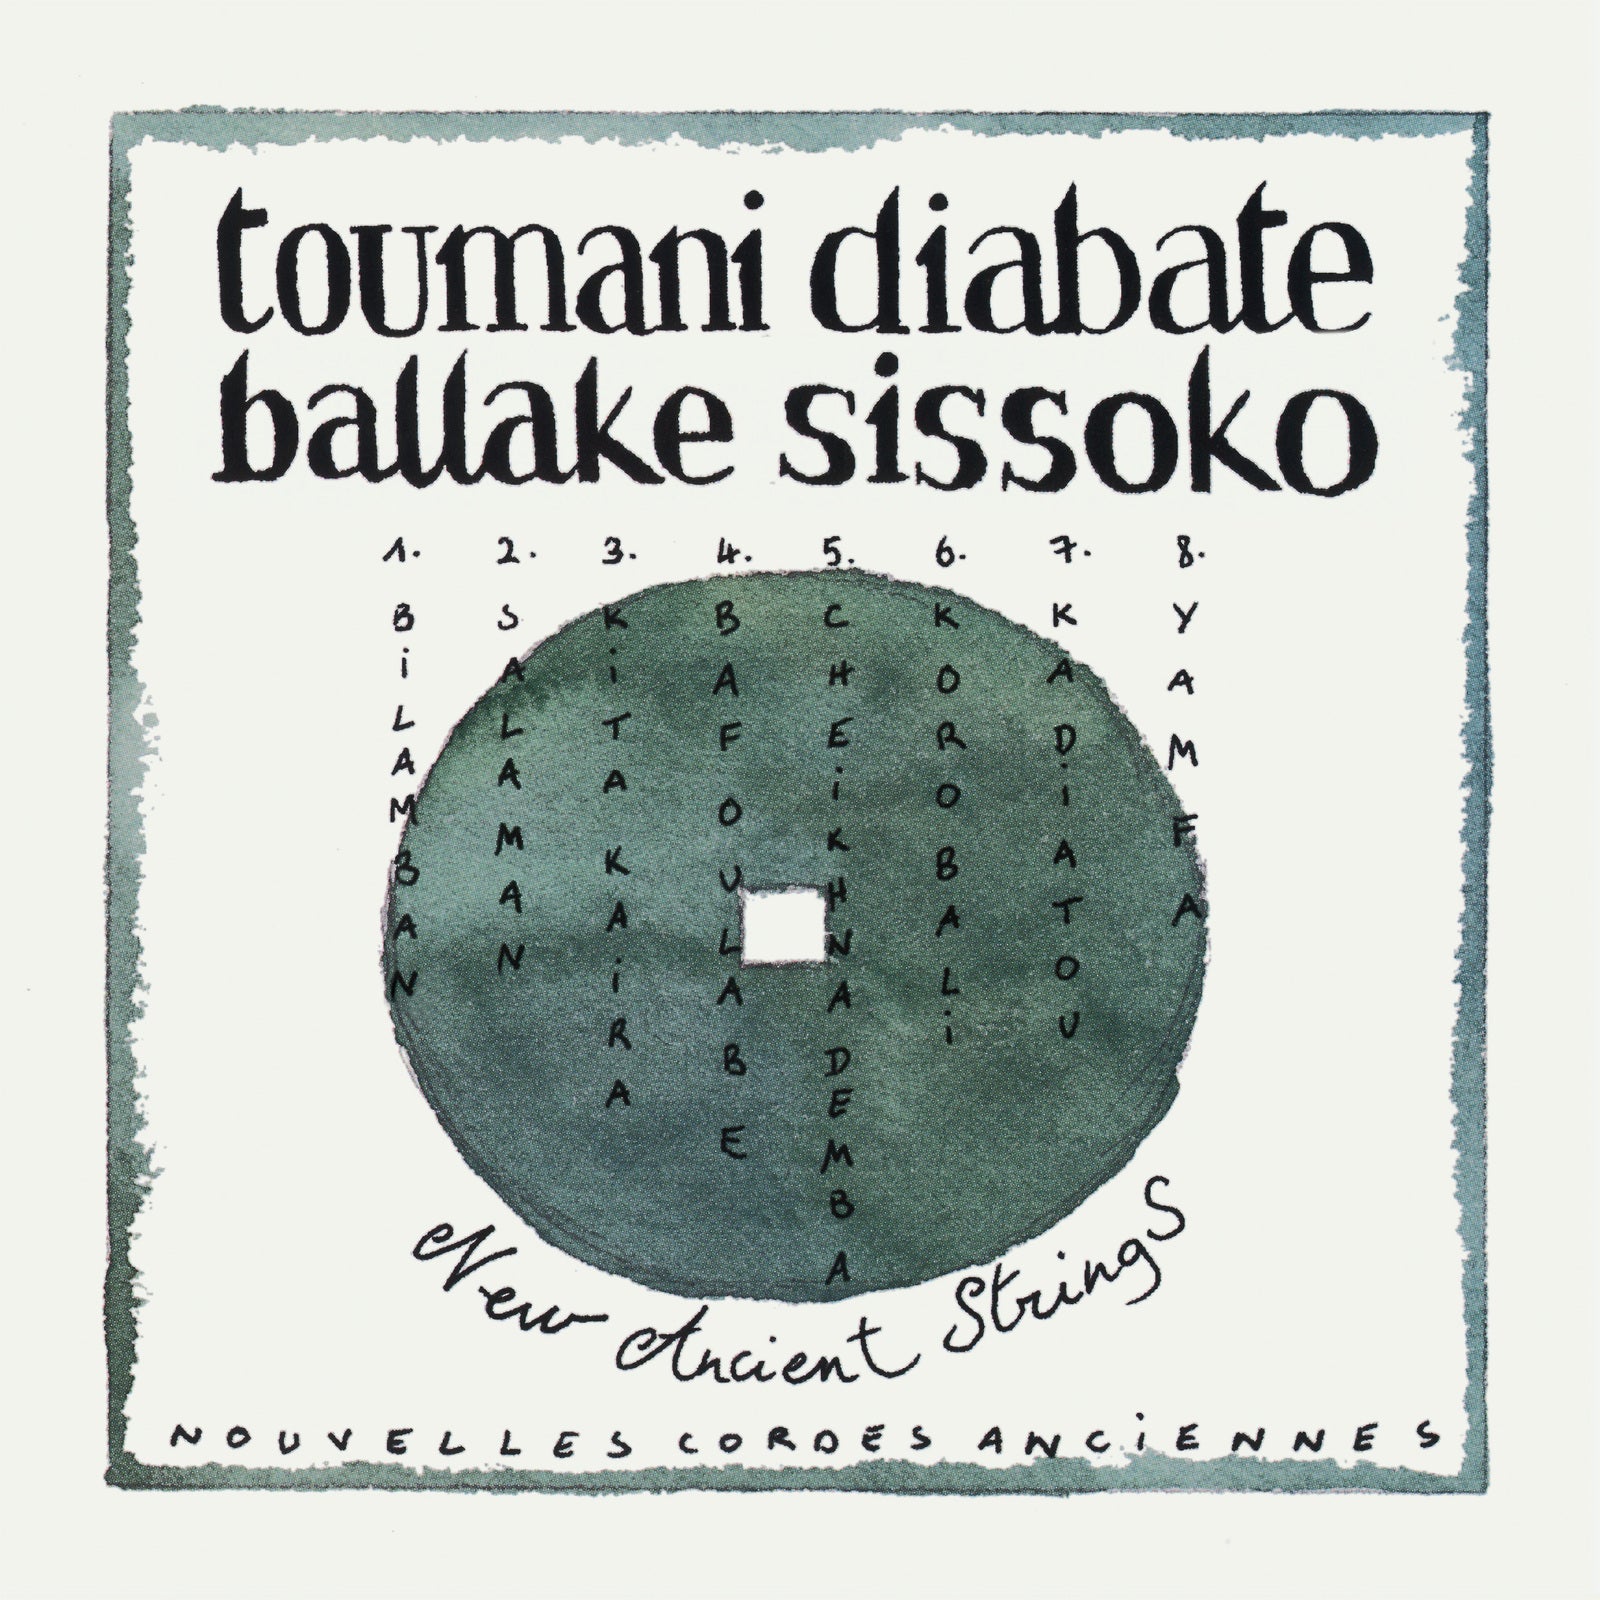 Toumani Diabate with Ballake Sissoko - NEW ANCIENT STRINGS (TWENTY-FIFTH ANNIVERSARY EDITION)